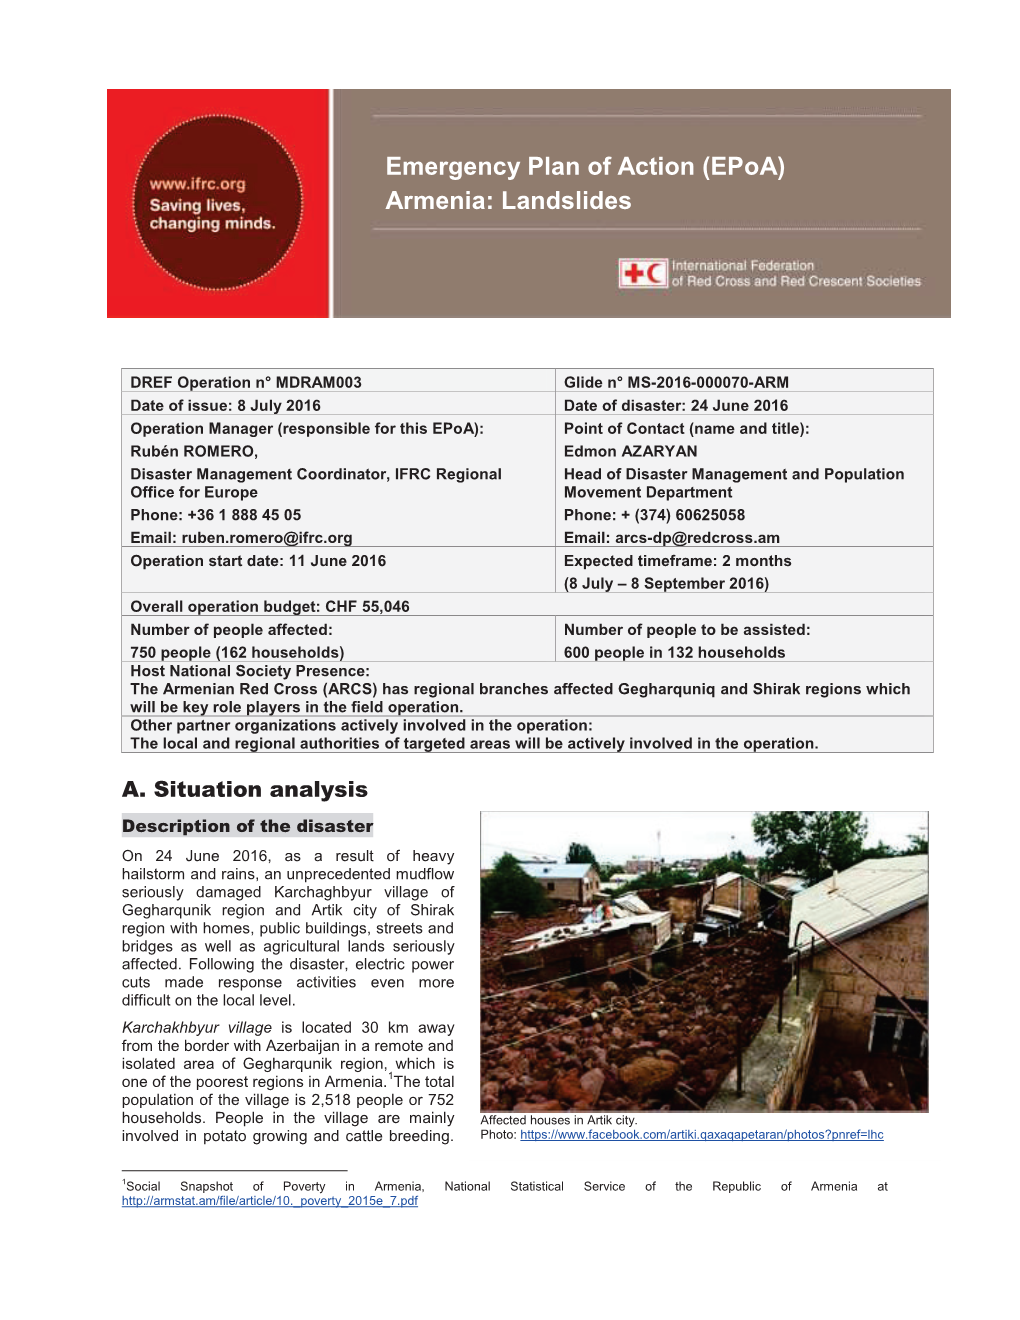 Emergency Plan of Action (Epoa) Armenia: Landslides